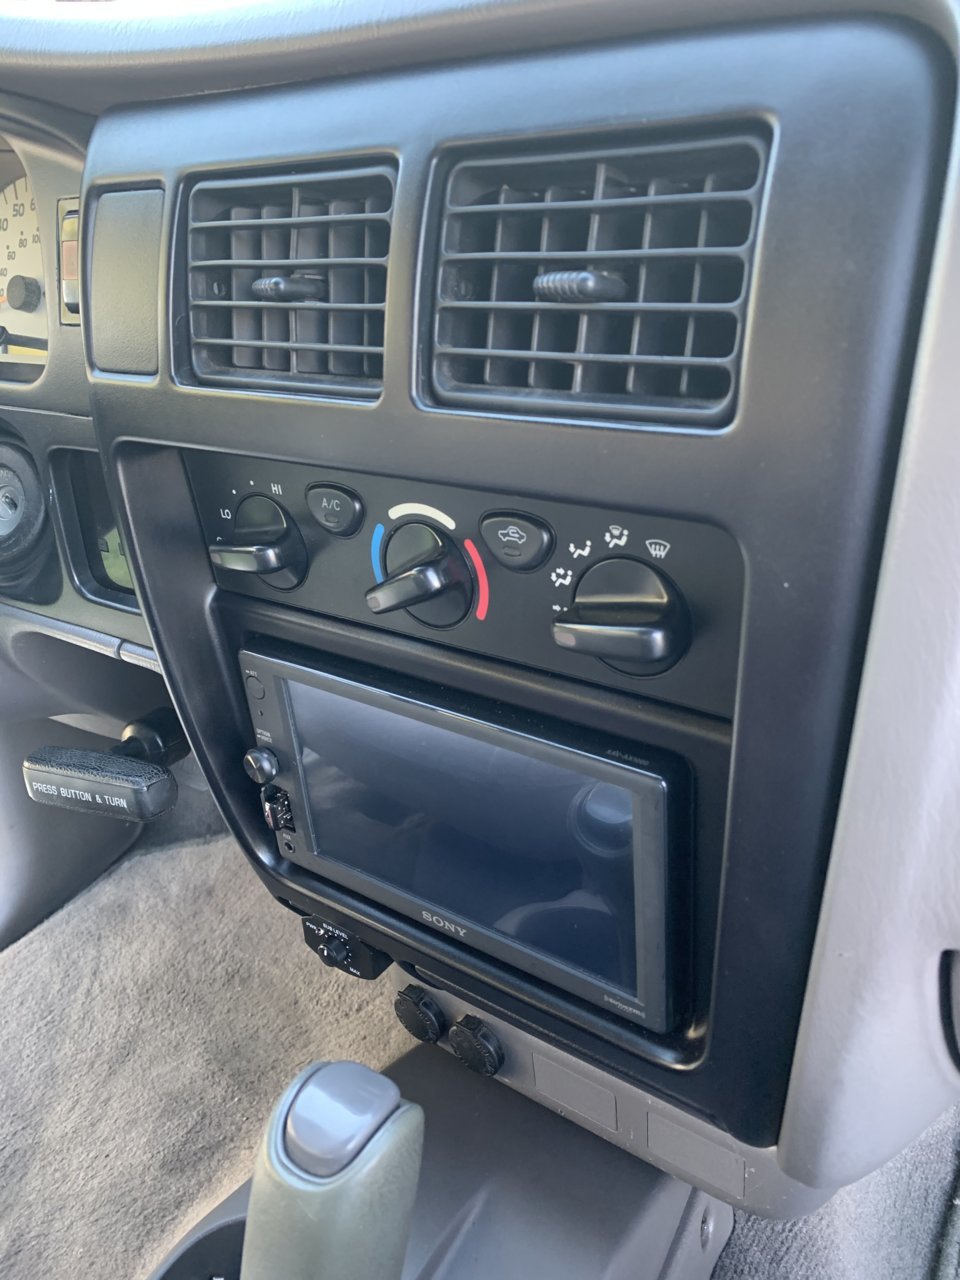 Toyota Tacoma radio upgrade 2005-2015 Android Navigation Carplay Stereo –  Topdisplay